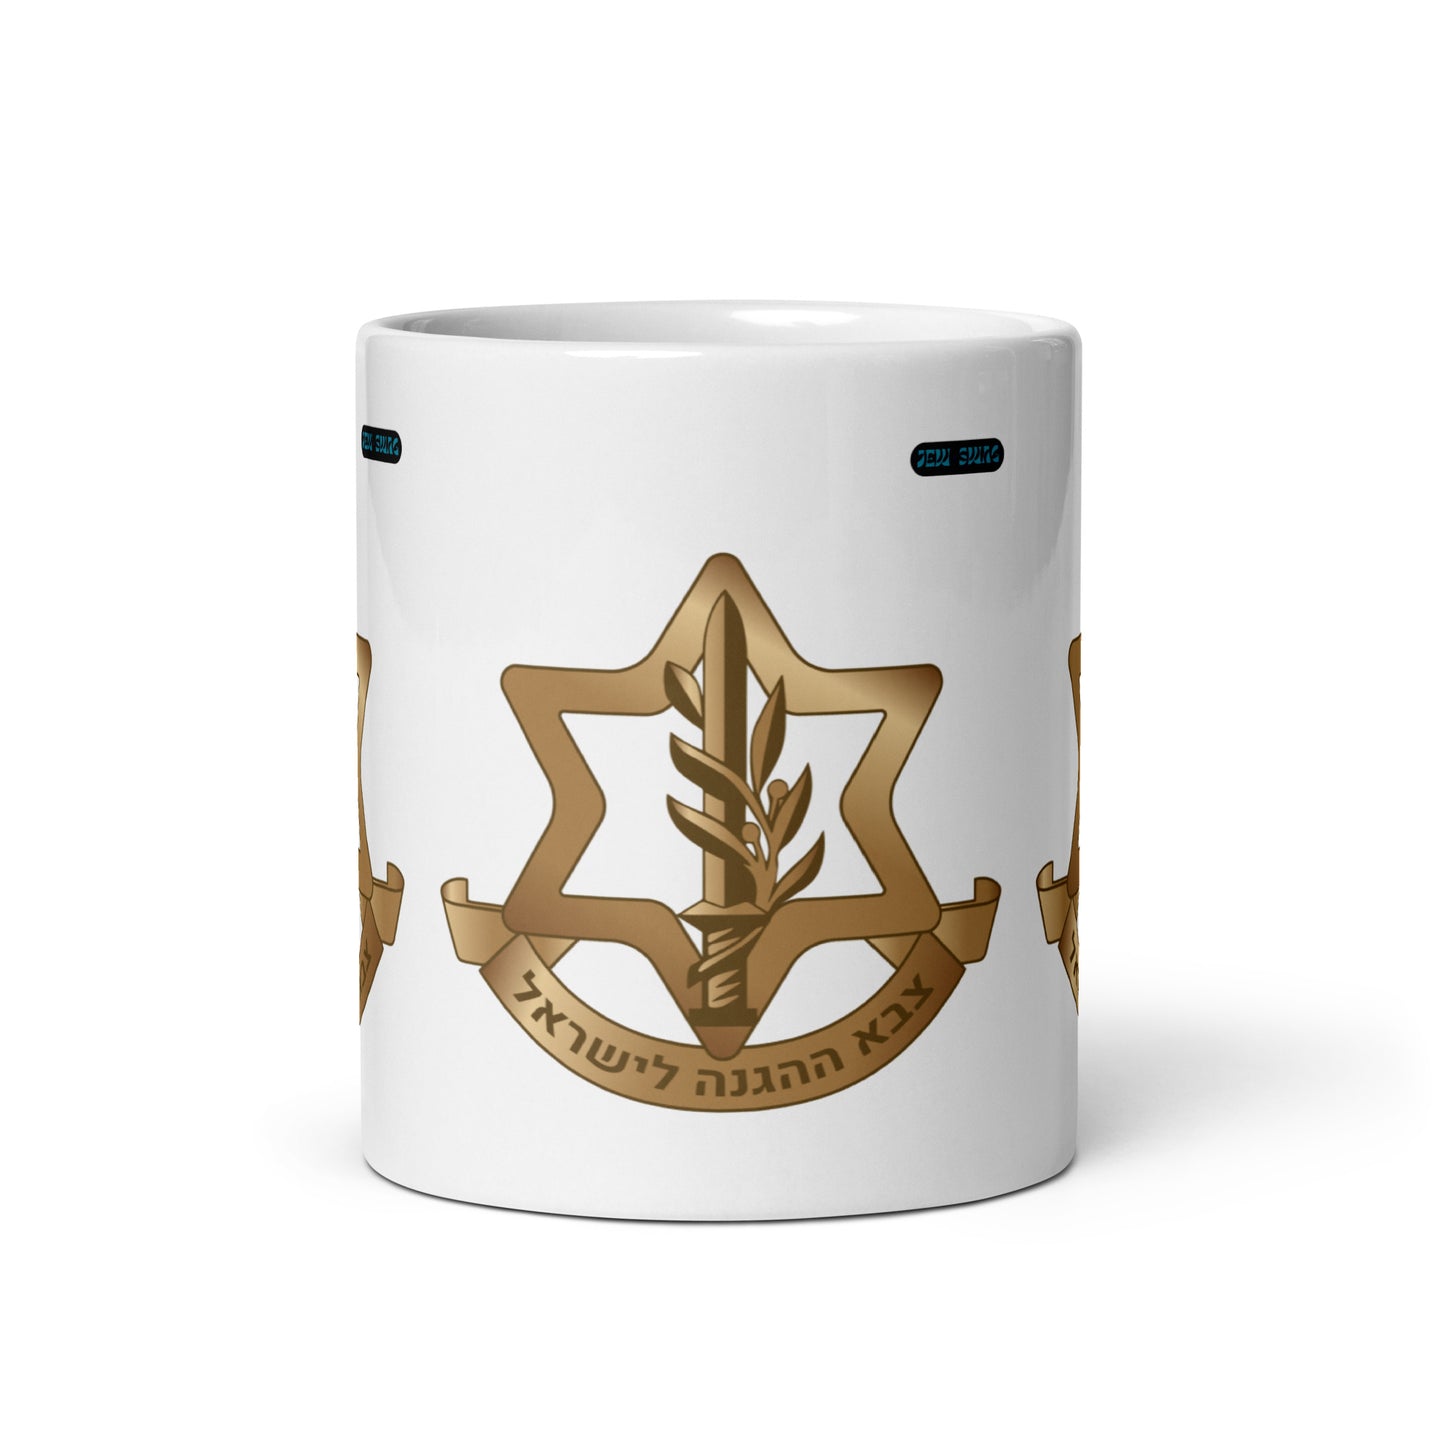 IDF - White glossy mug